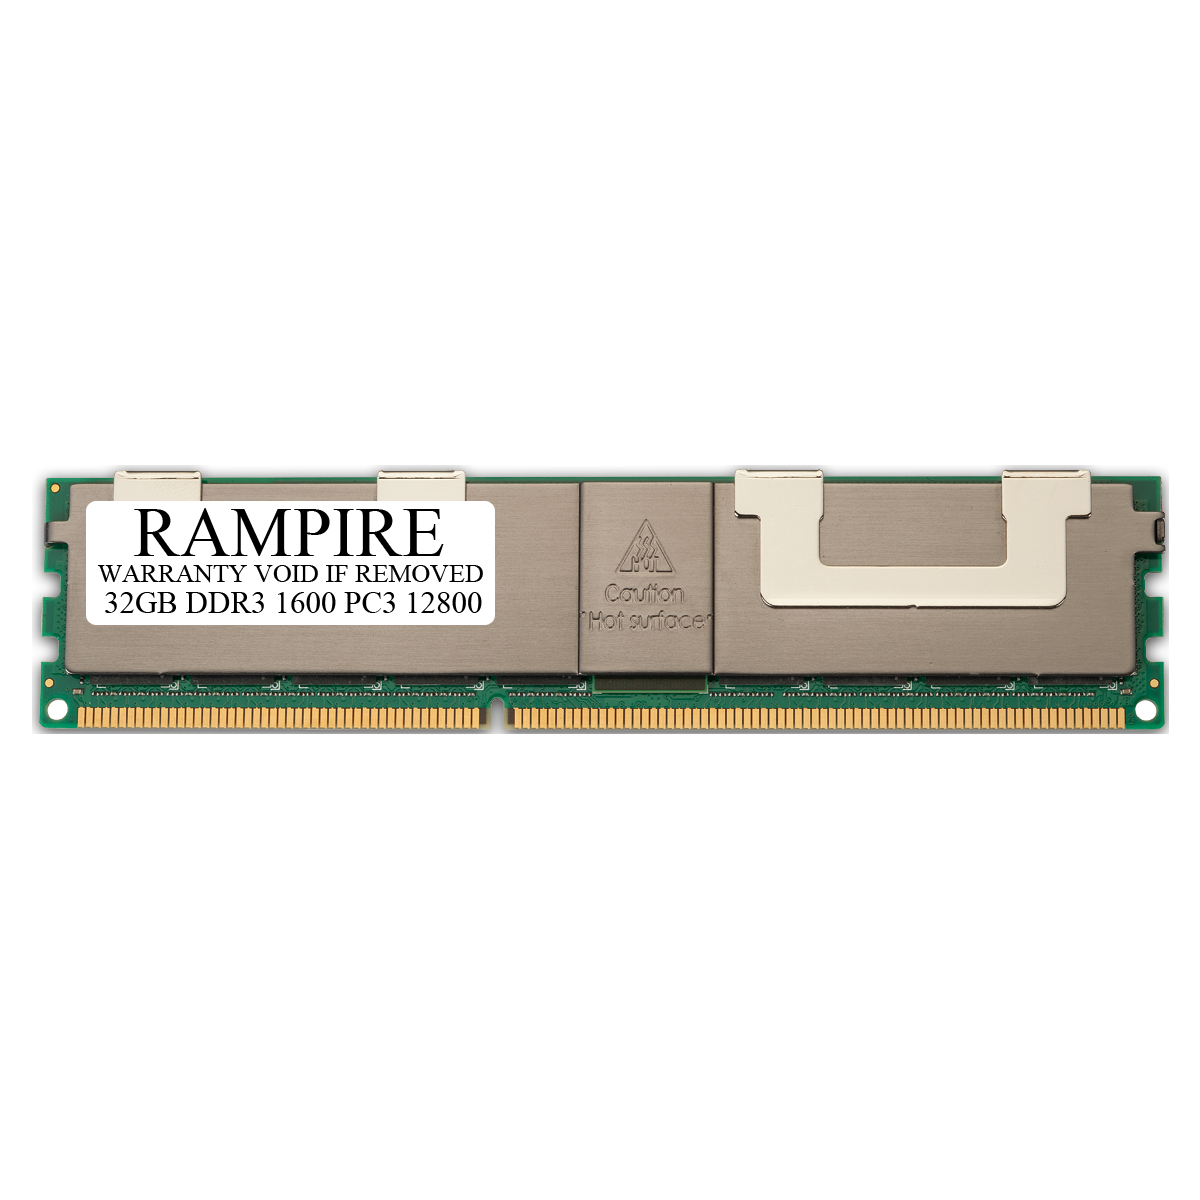 RAMPIRE 32GB DDR3 1600 (PC3 12800) 240-Pin SDRAM 4Rx4 Standard Profile 1.35V ECC Load Reduced Server Memory